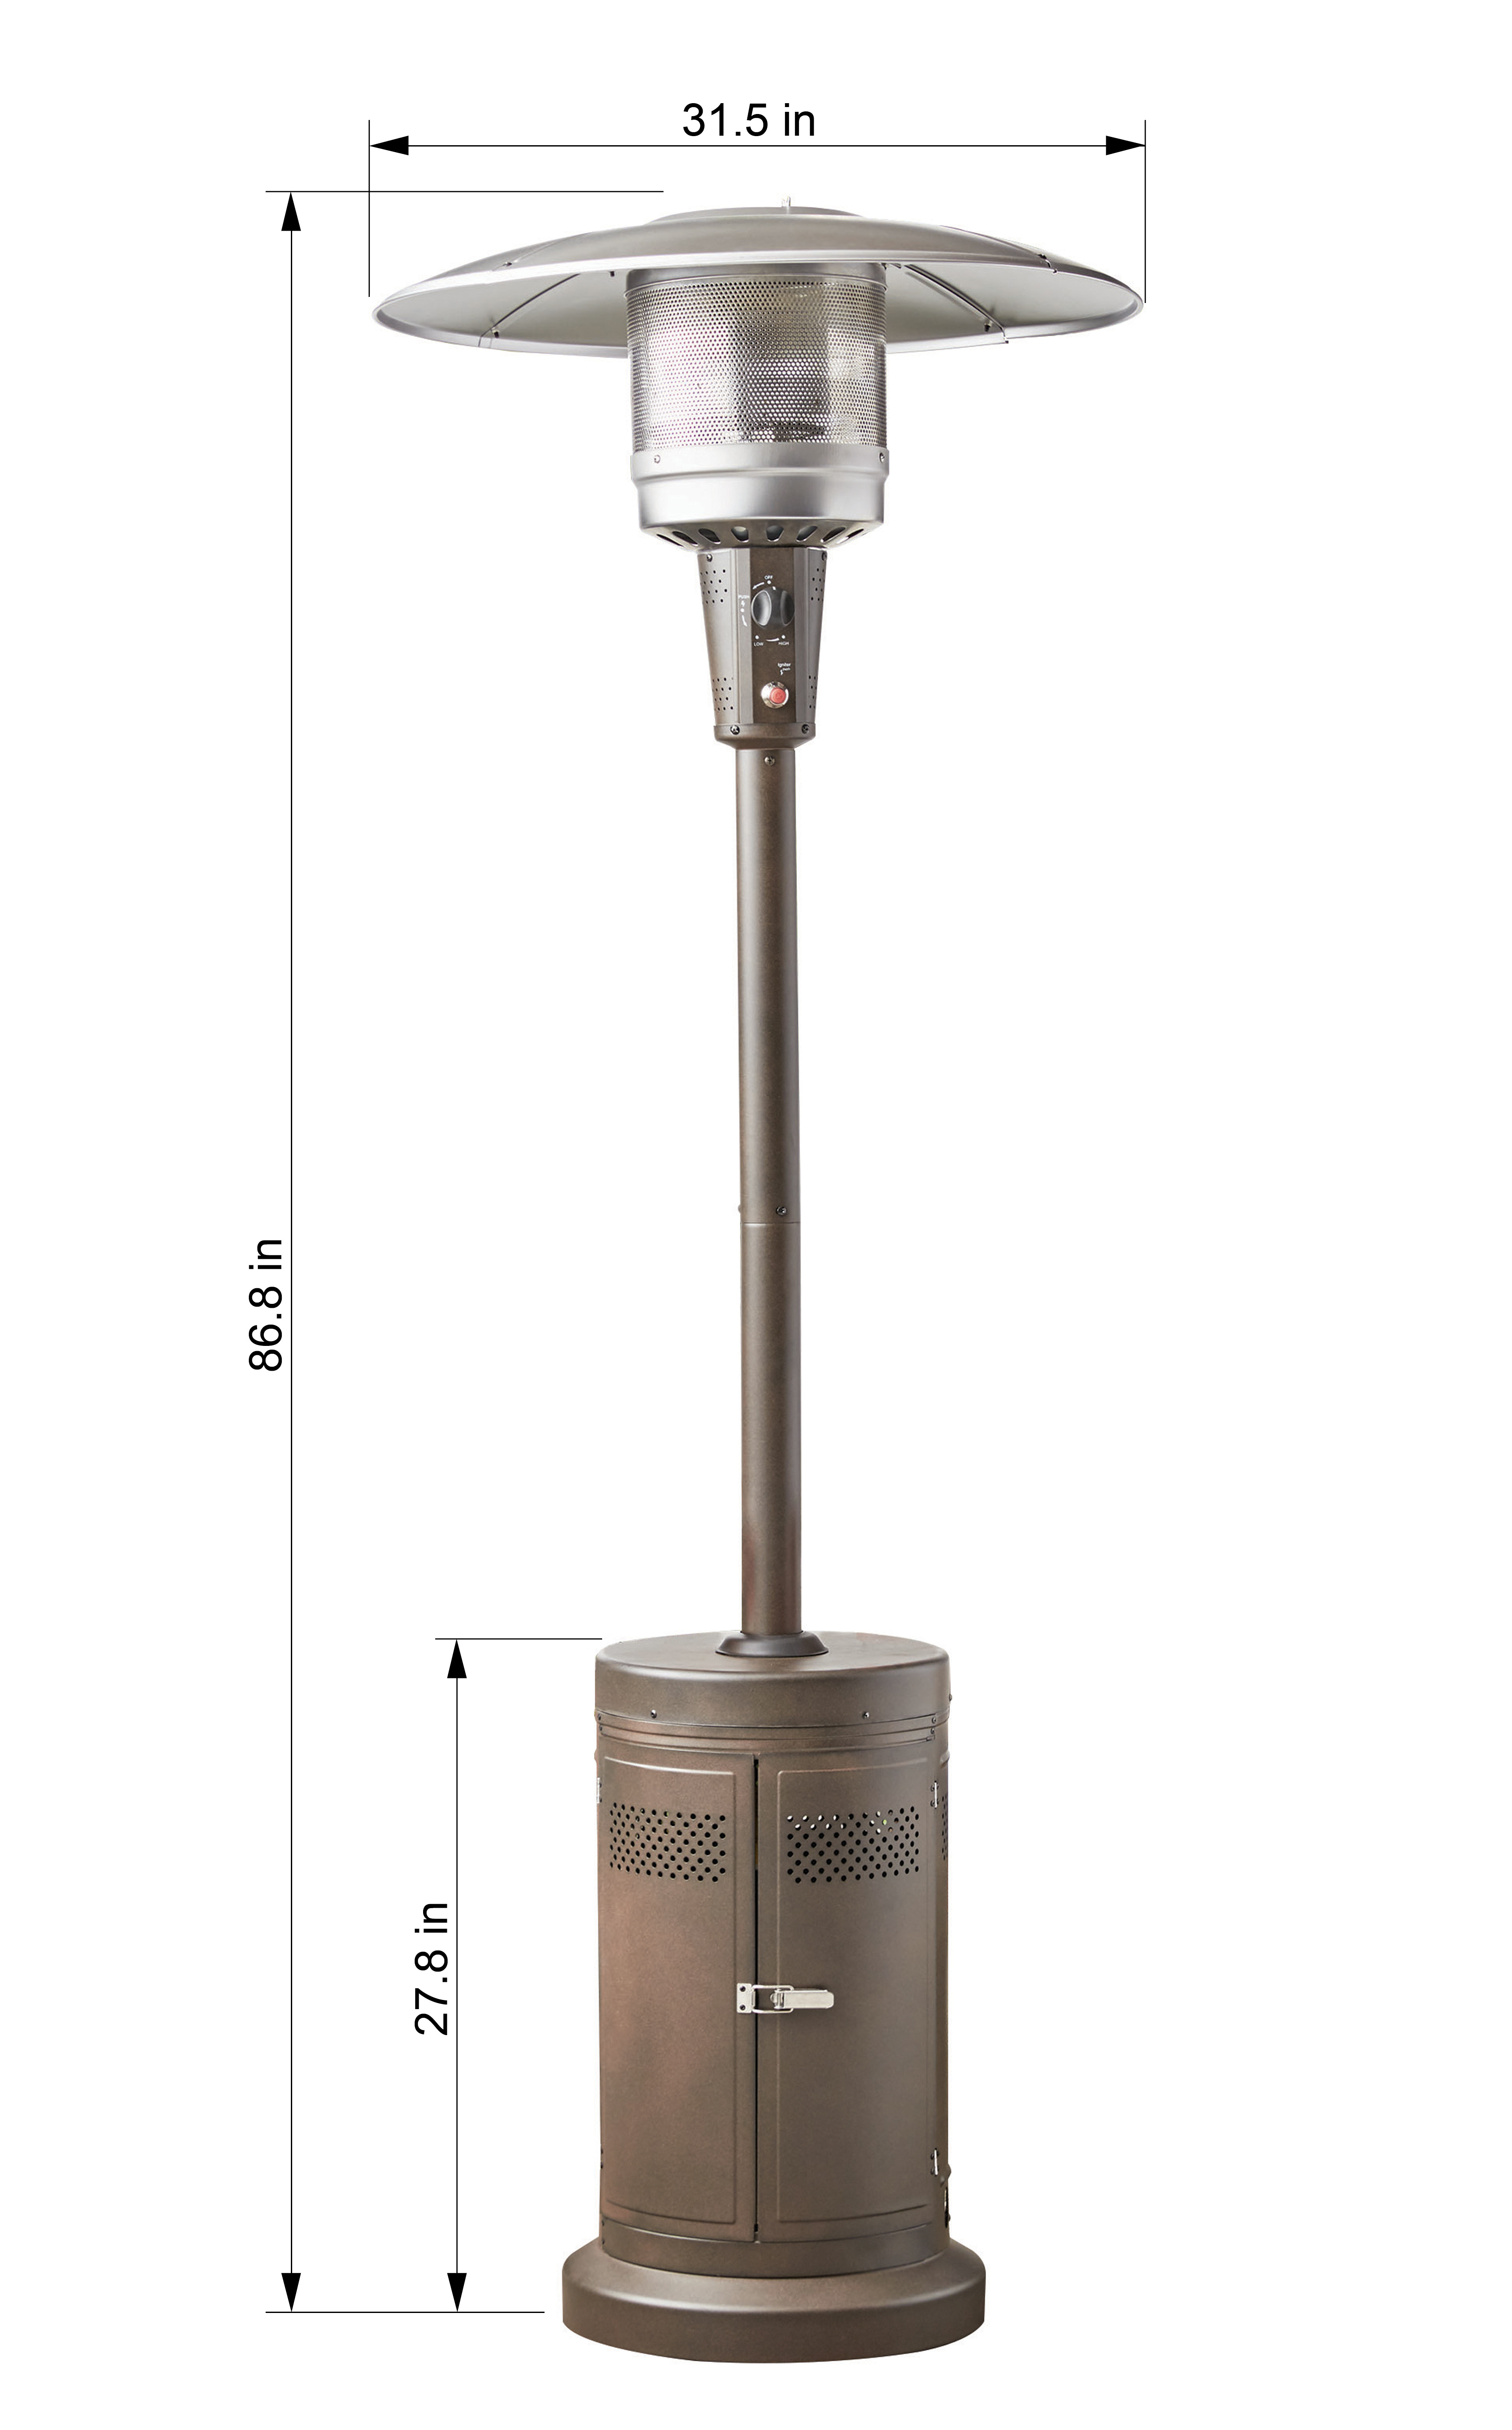 Mainstays 48,000 BTU Propane Gas Outdoor Freestanding Patio Heater , Brown Powder Coat Finish - image 4 of 6